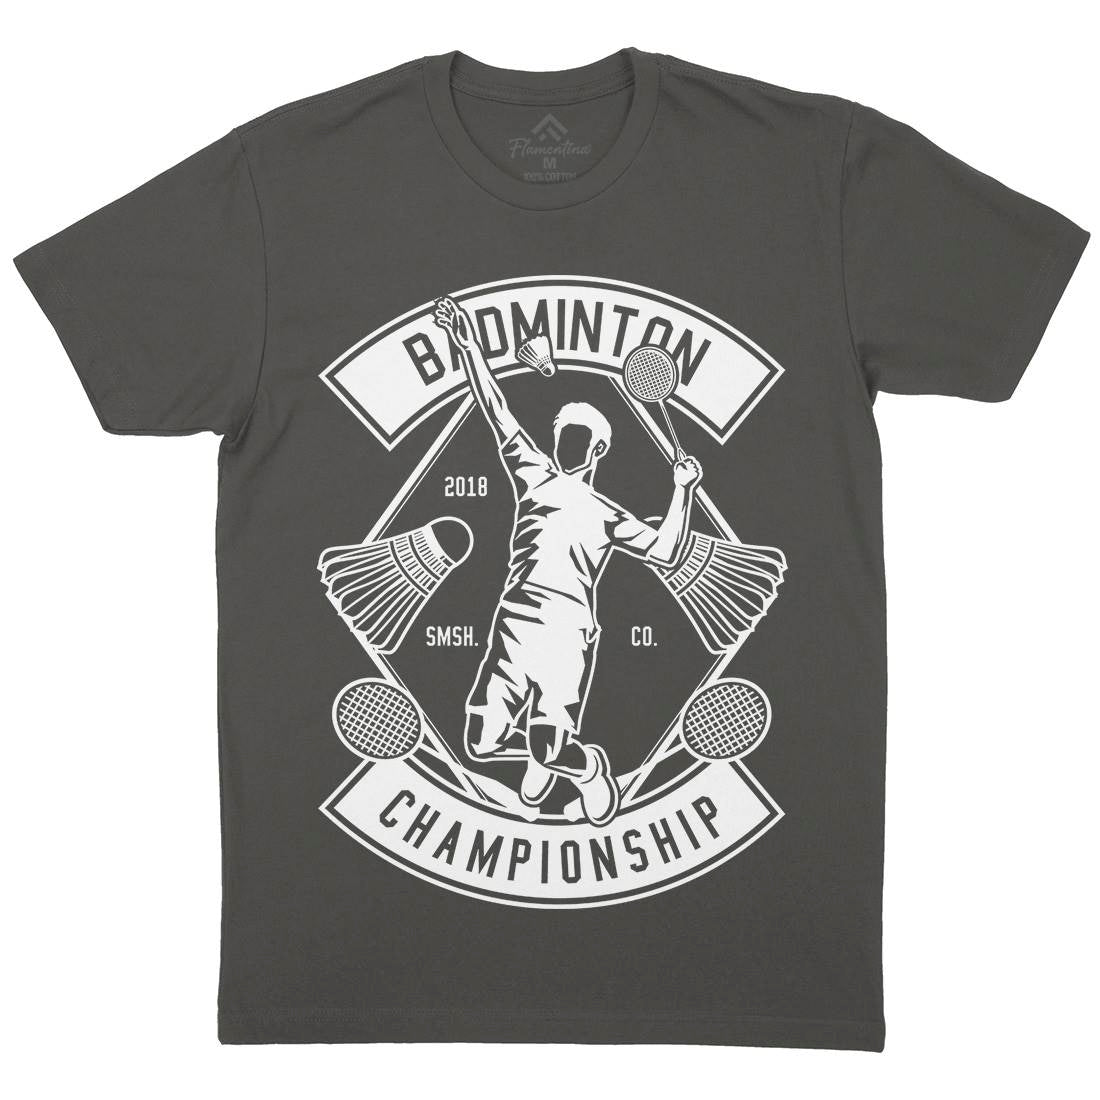 Badminton Championship Mens Crew Neck T-Shirt Sport B486